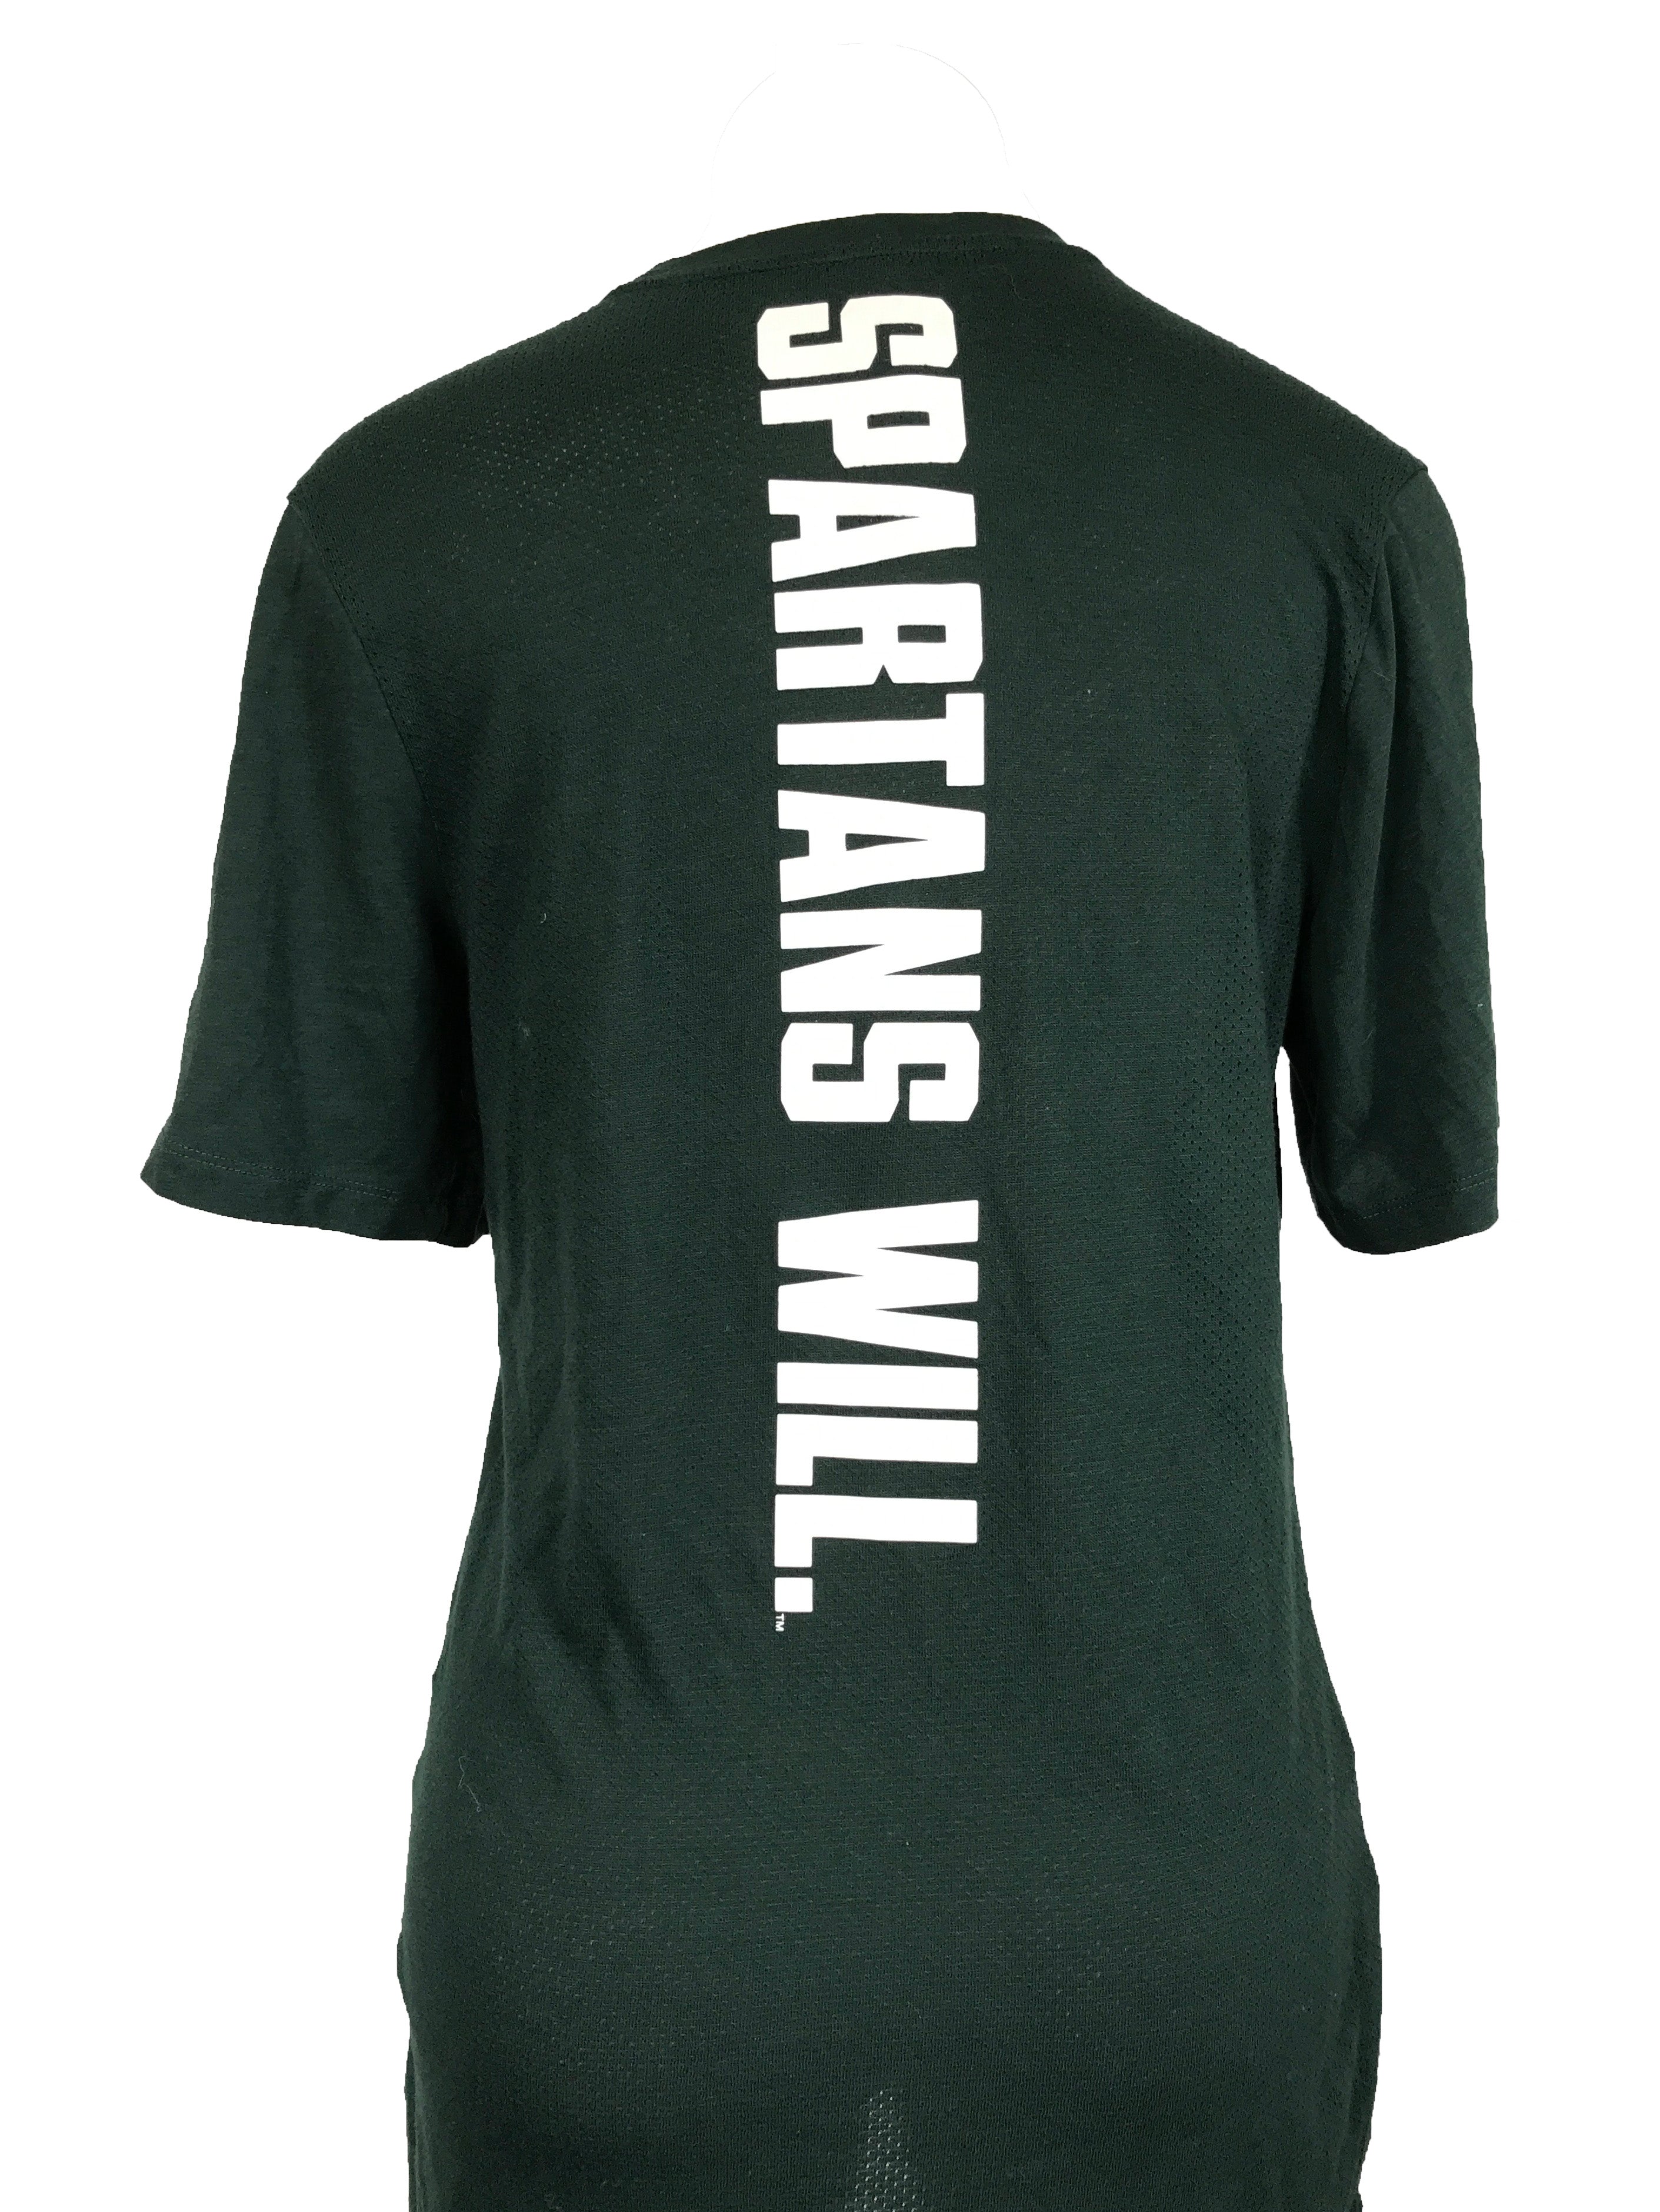 Dark Green Michigan State Nike T-Shirt Men's Size Small